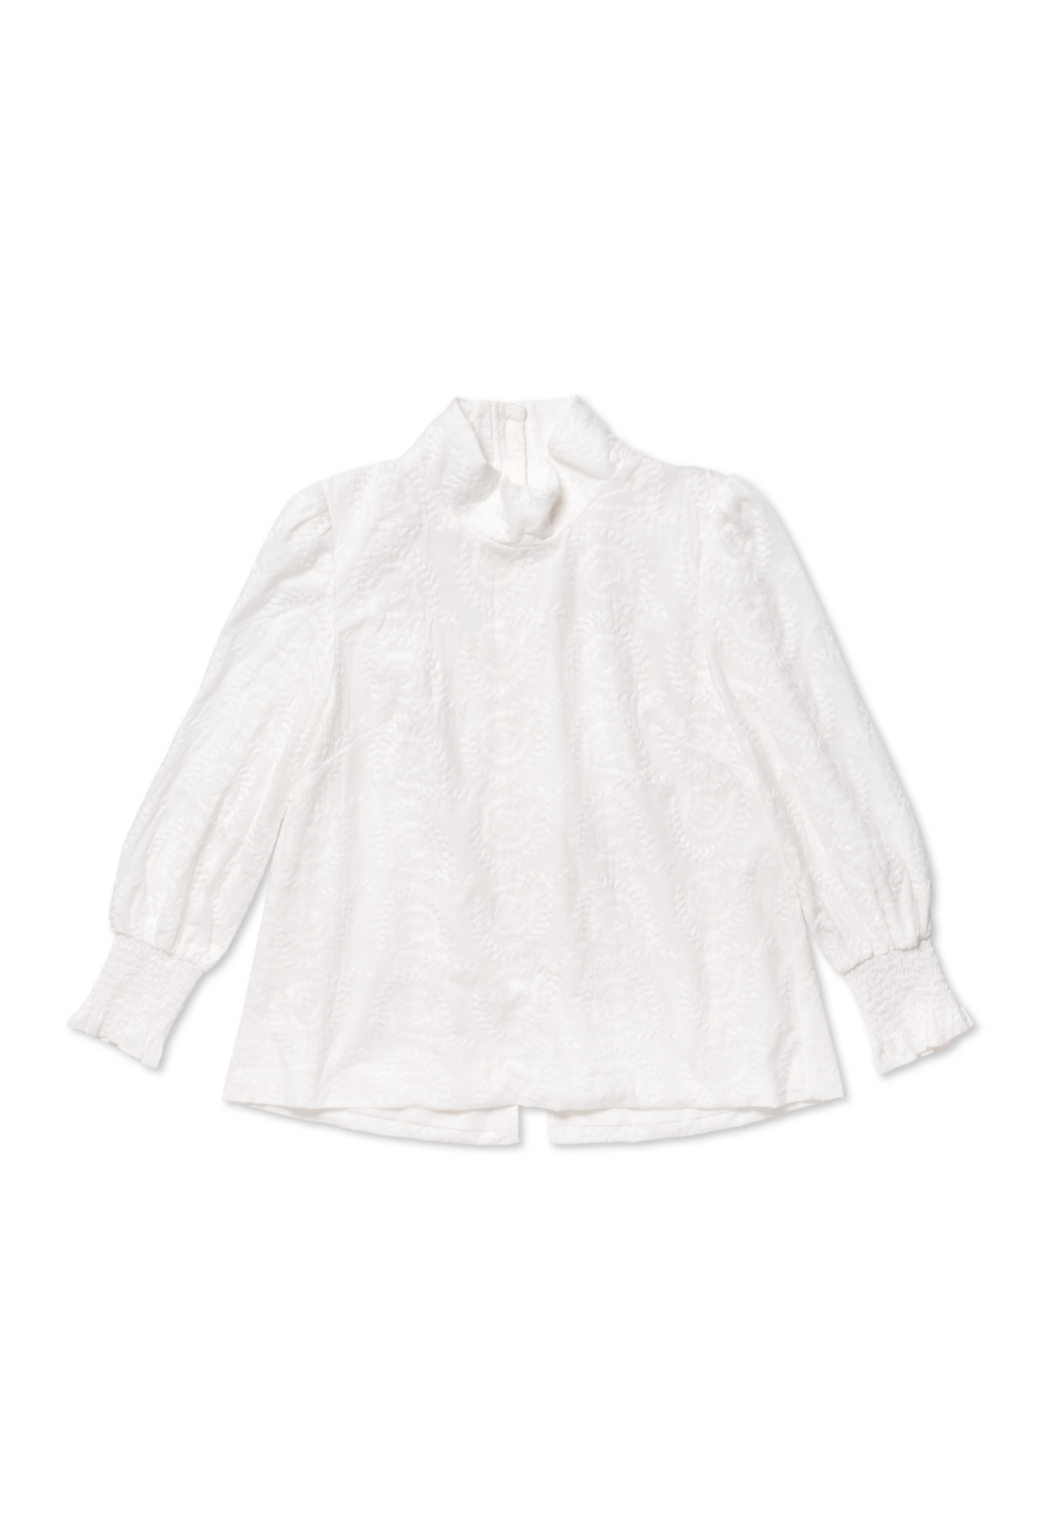 Long Sleeve Mod Top - White Embroidery – BURU